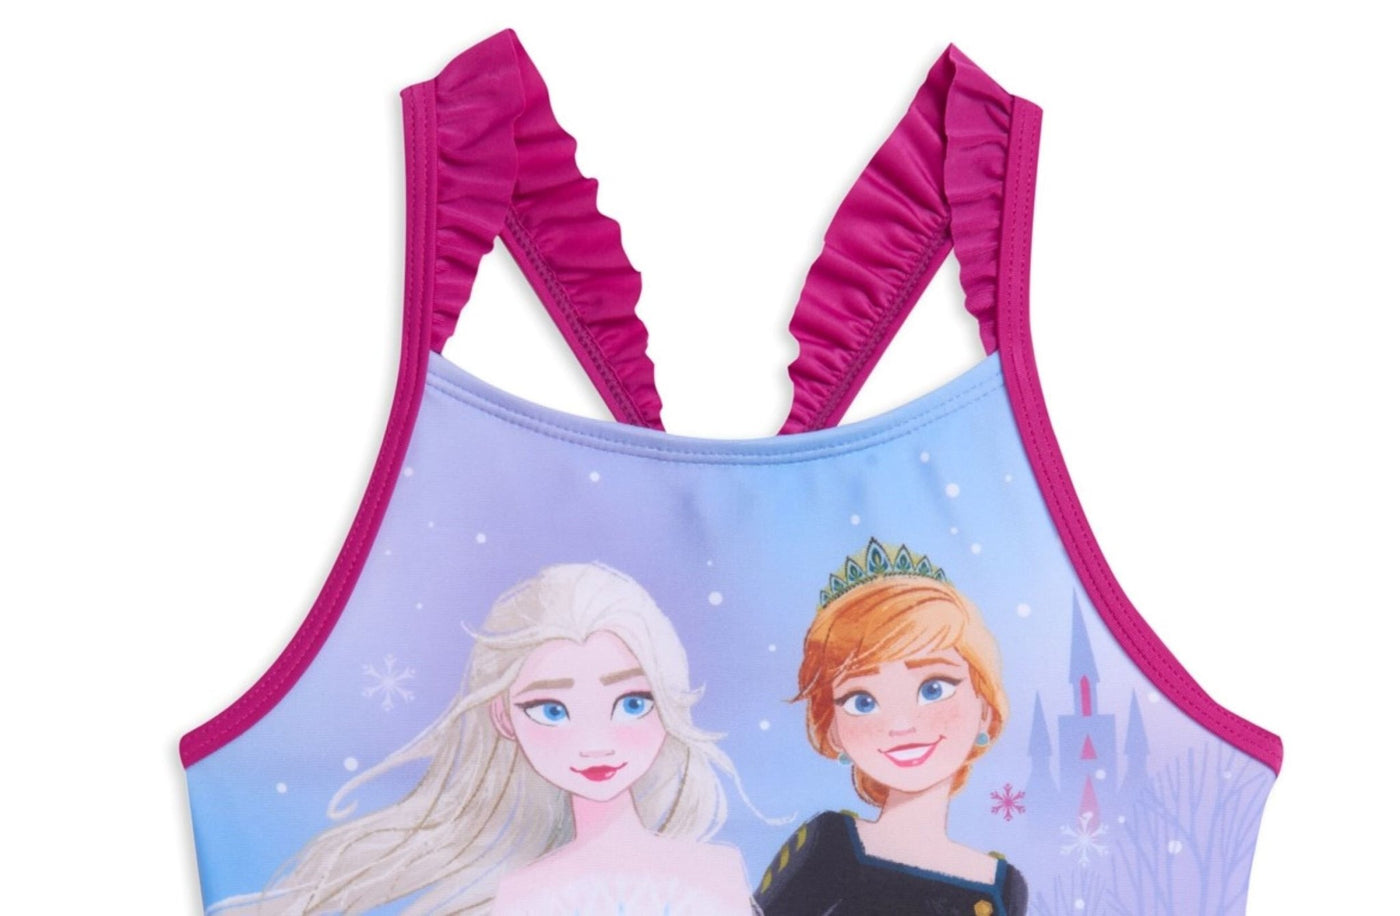 Disney Frozen UPF 50+ Tankini Top Bikini Bottom Swim Set - imagikids